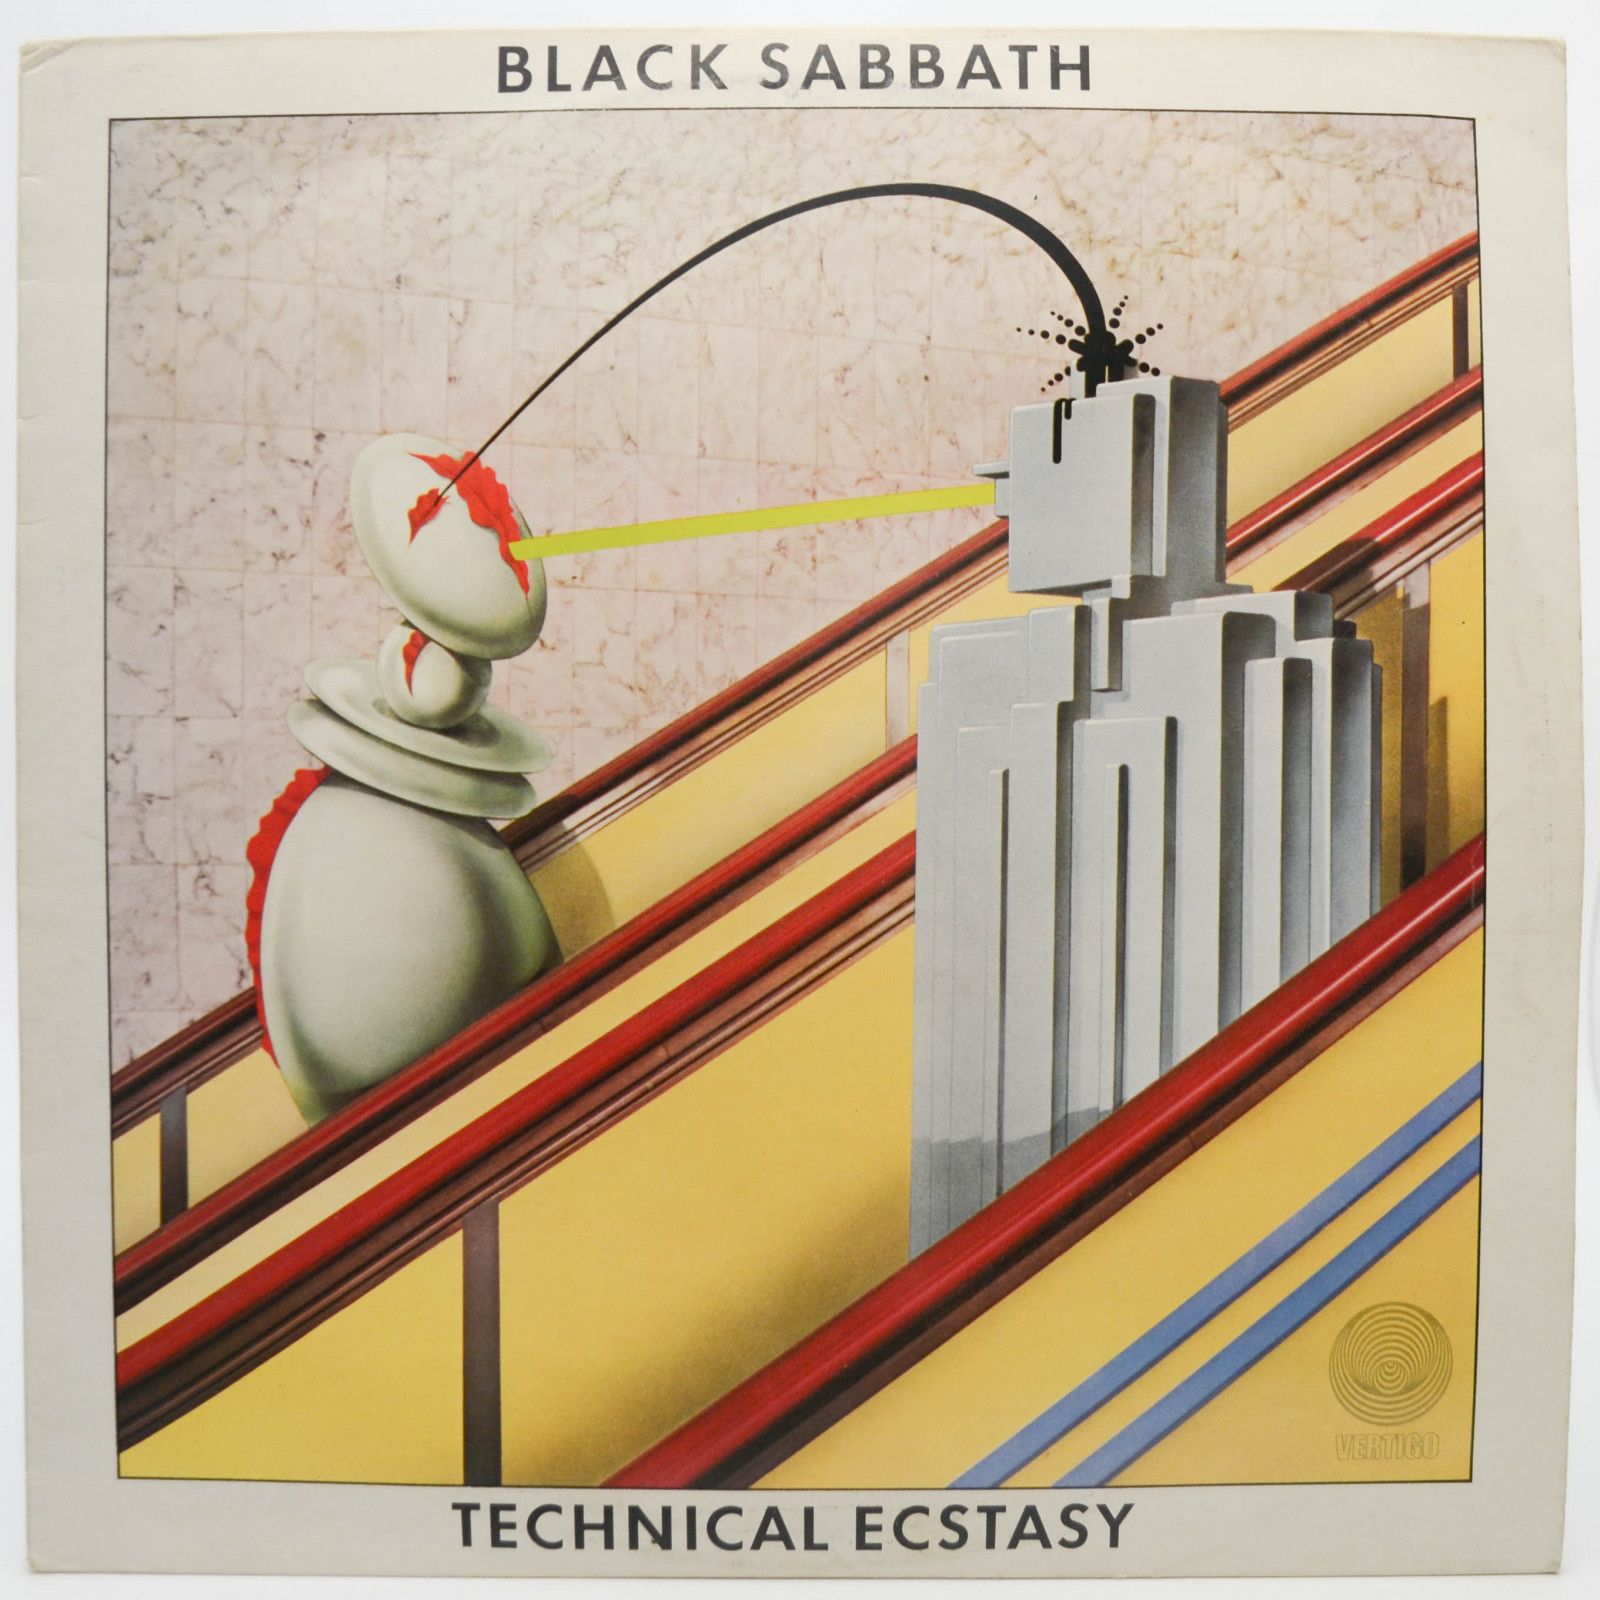 Black Sabbath — Technical Ecstasy (1-st, UK), 1976